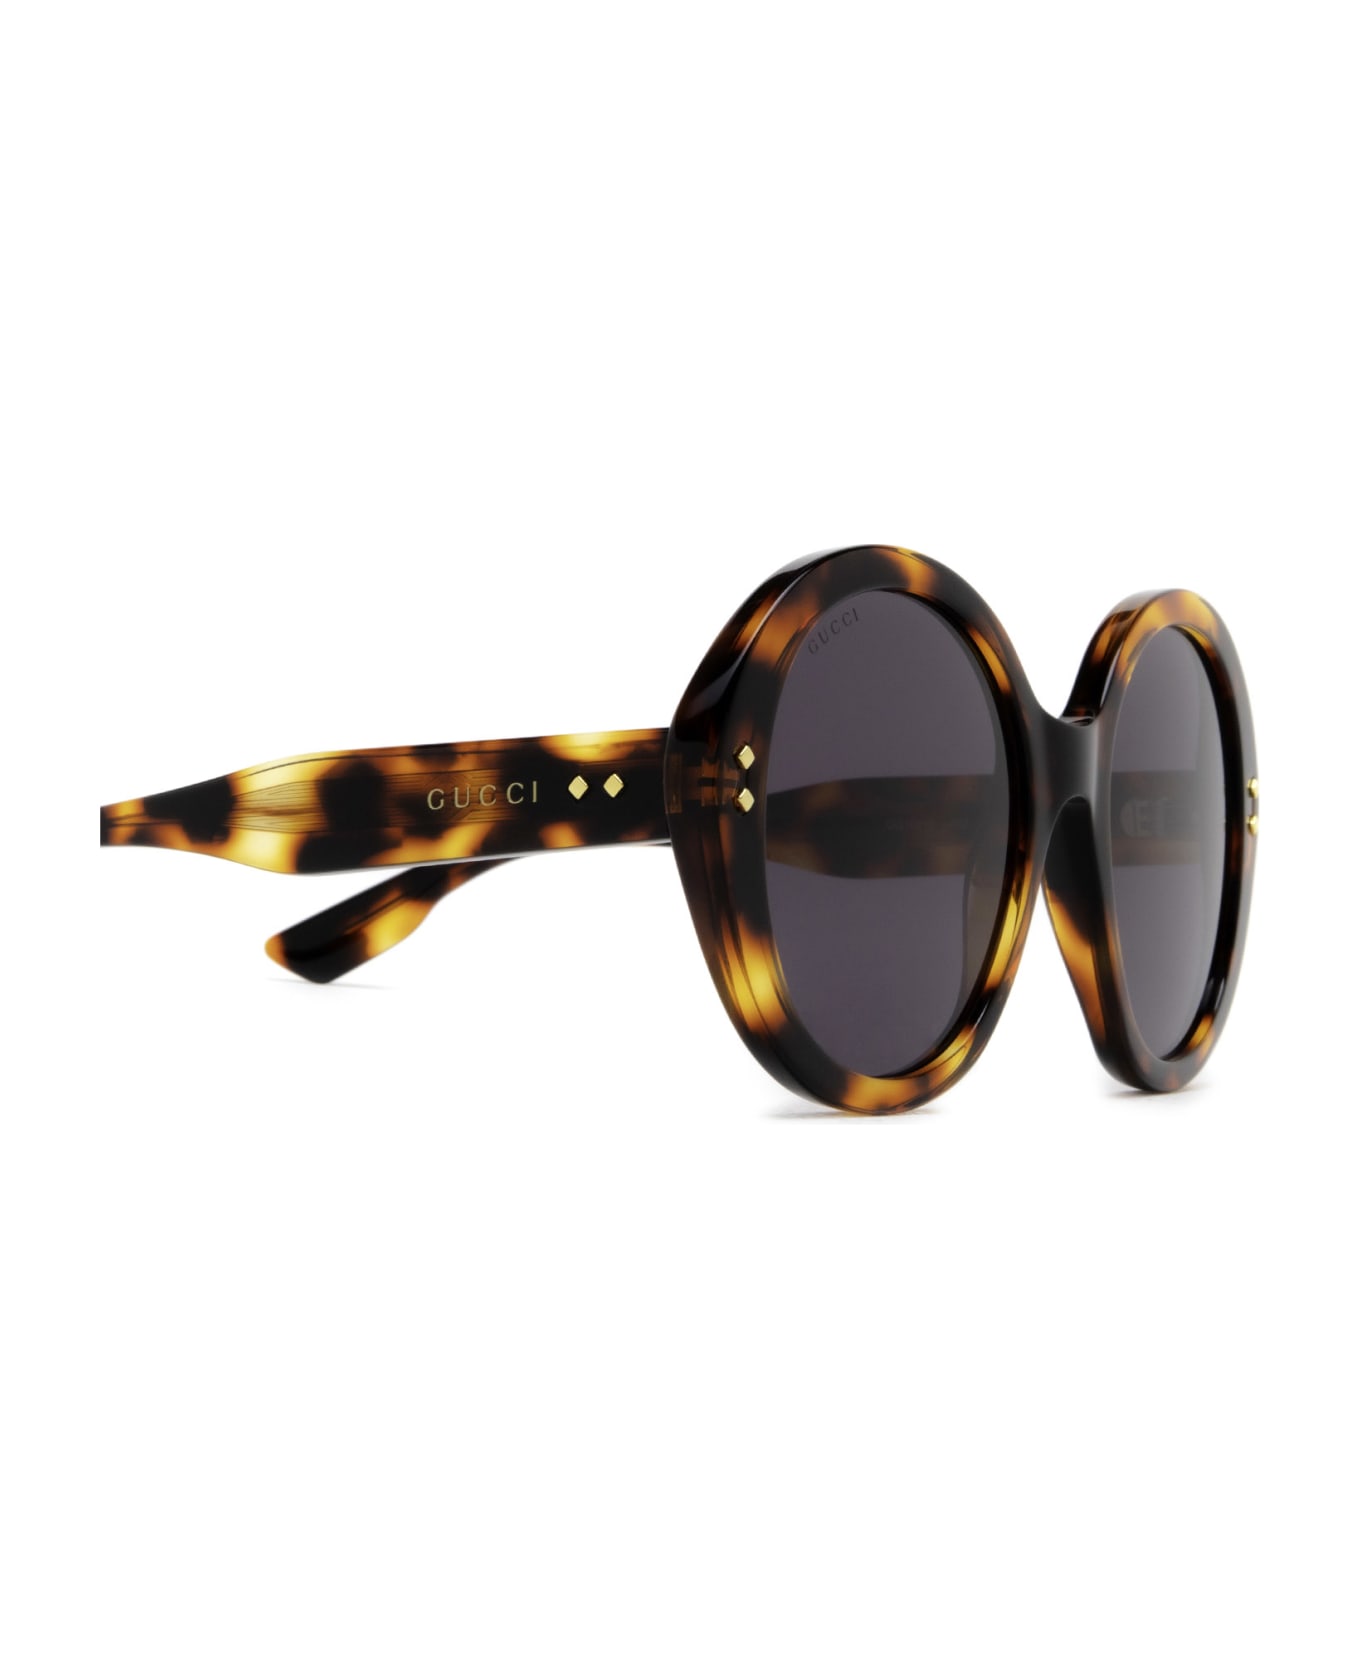 Gucci Eyewear Gg1081s Havana Sunglasses - Havana